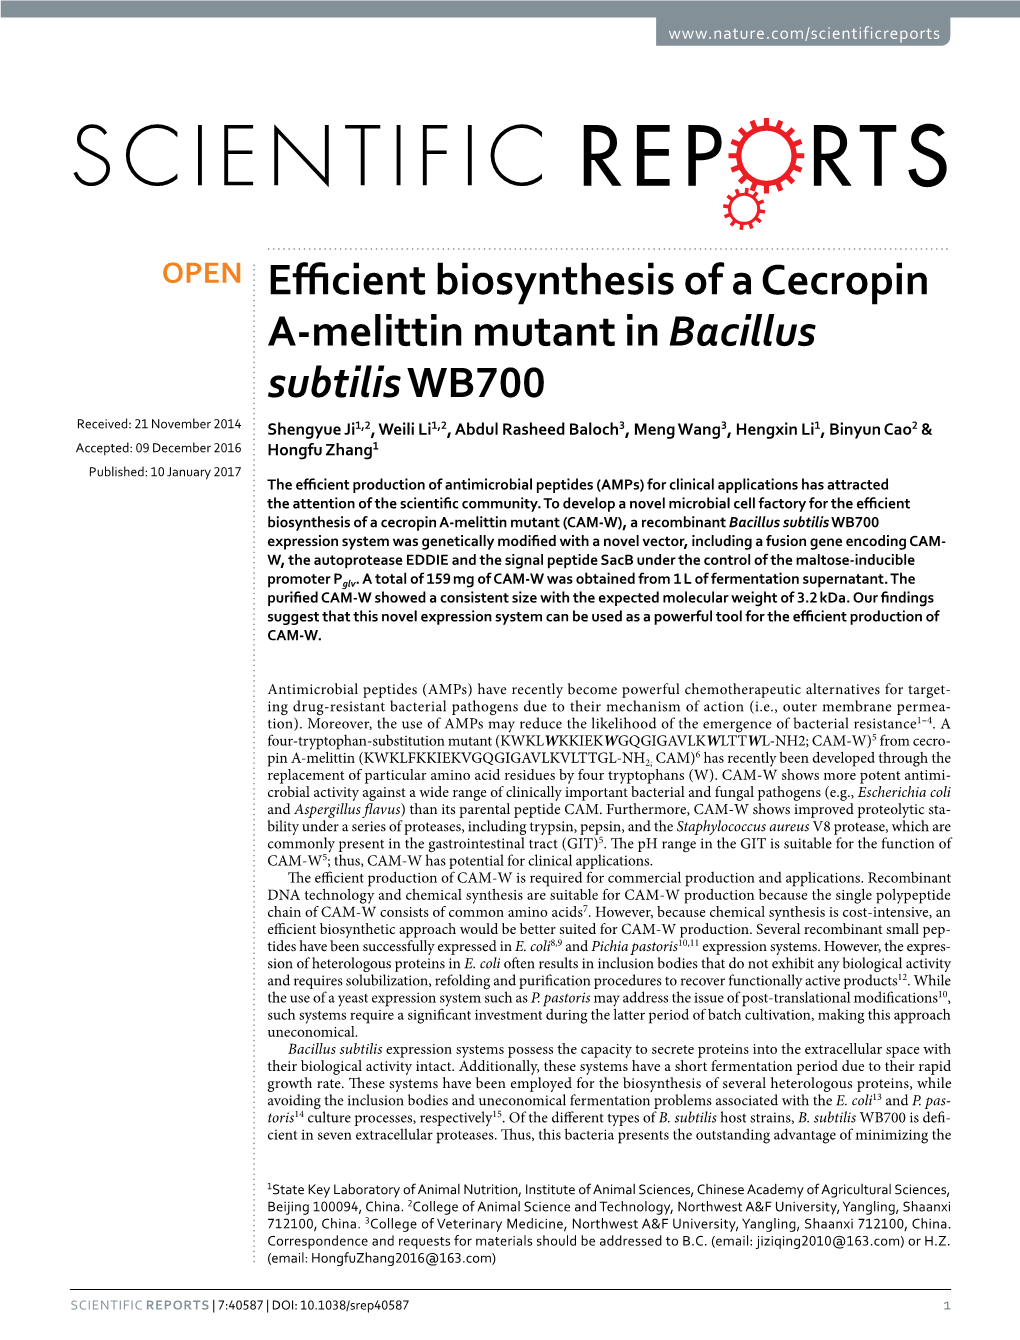 Efficient Biosynthesis of a Cecropin A-Melittin Mutant in Bacillus Subtilis WB700